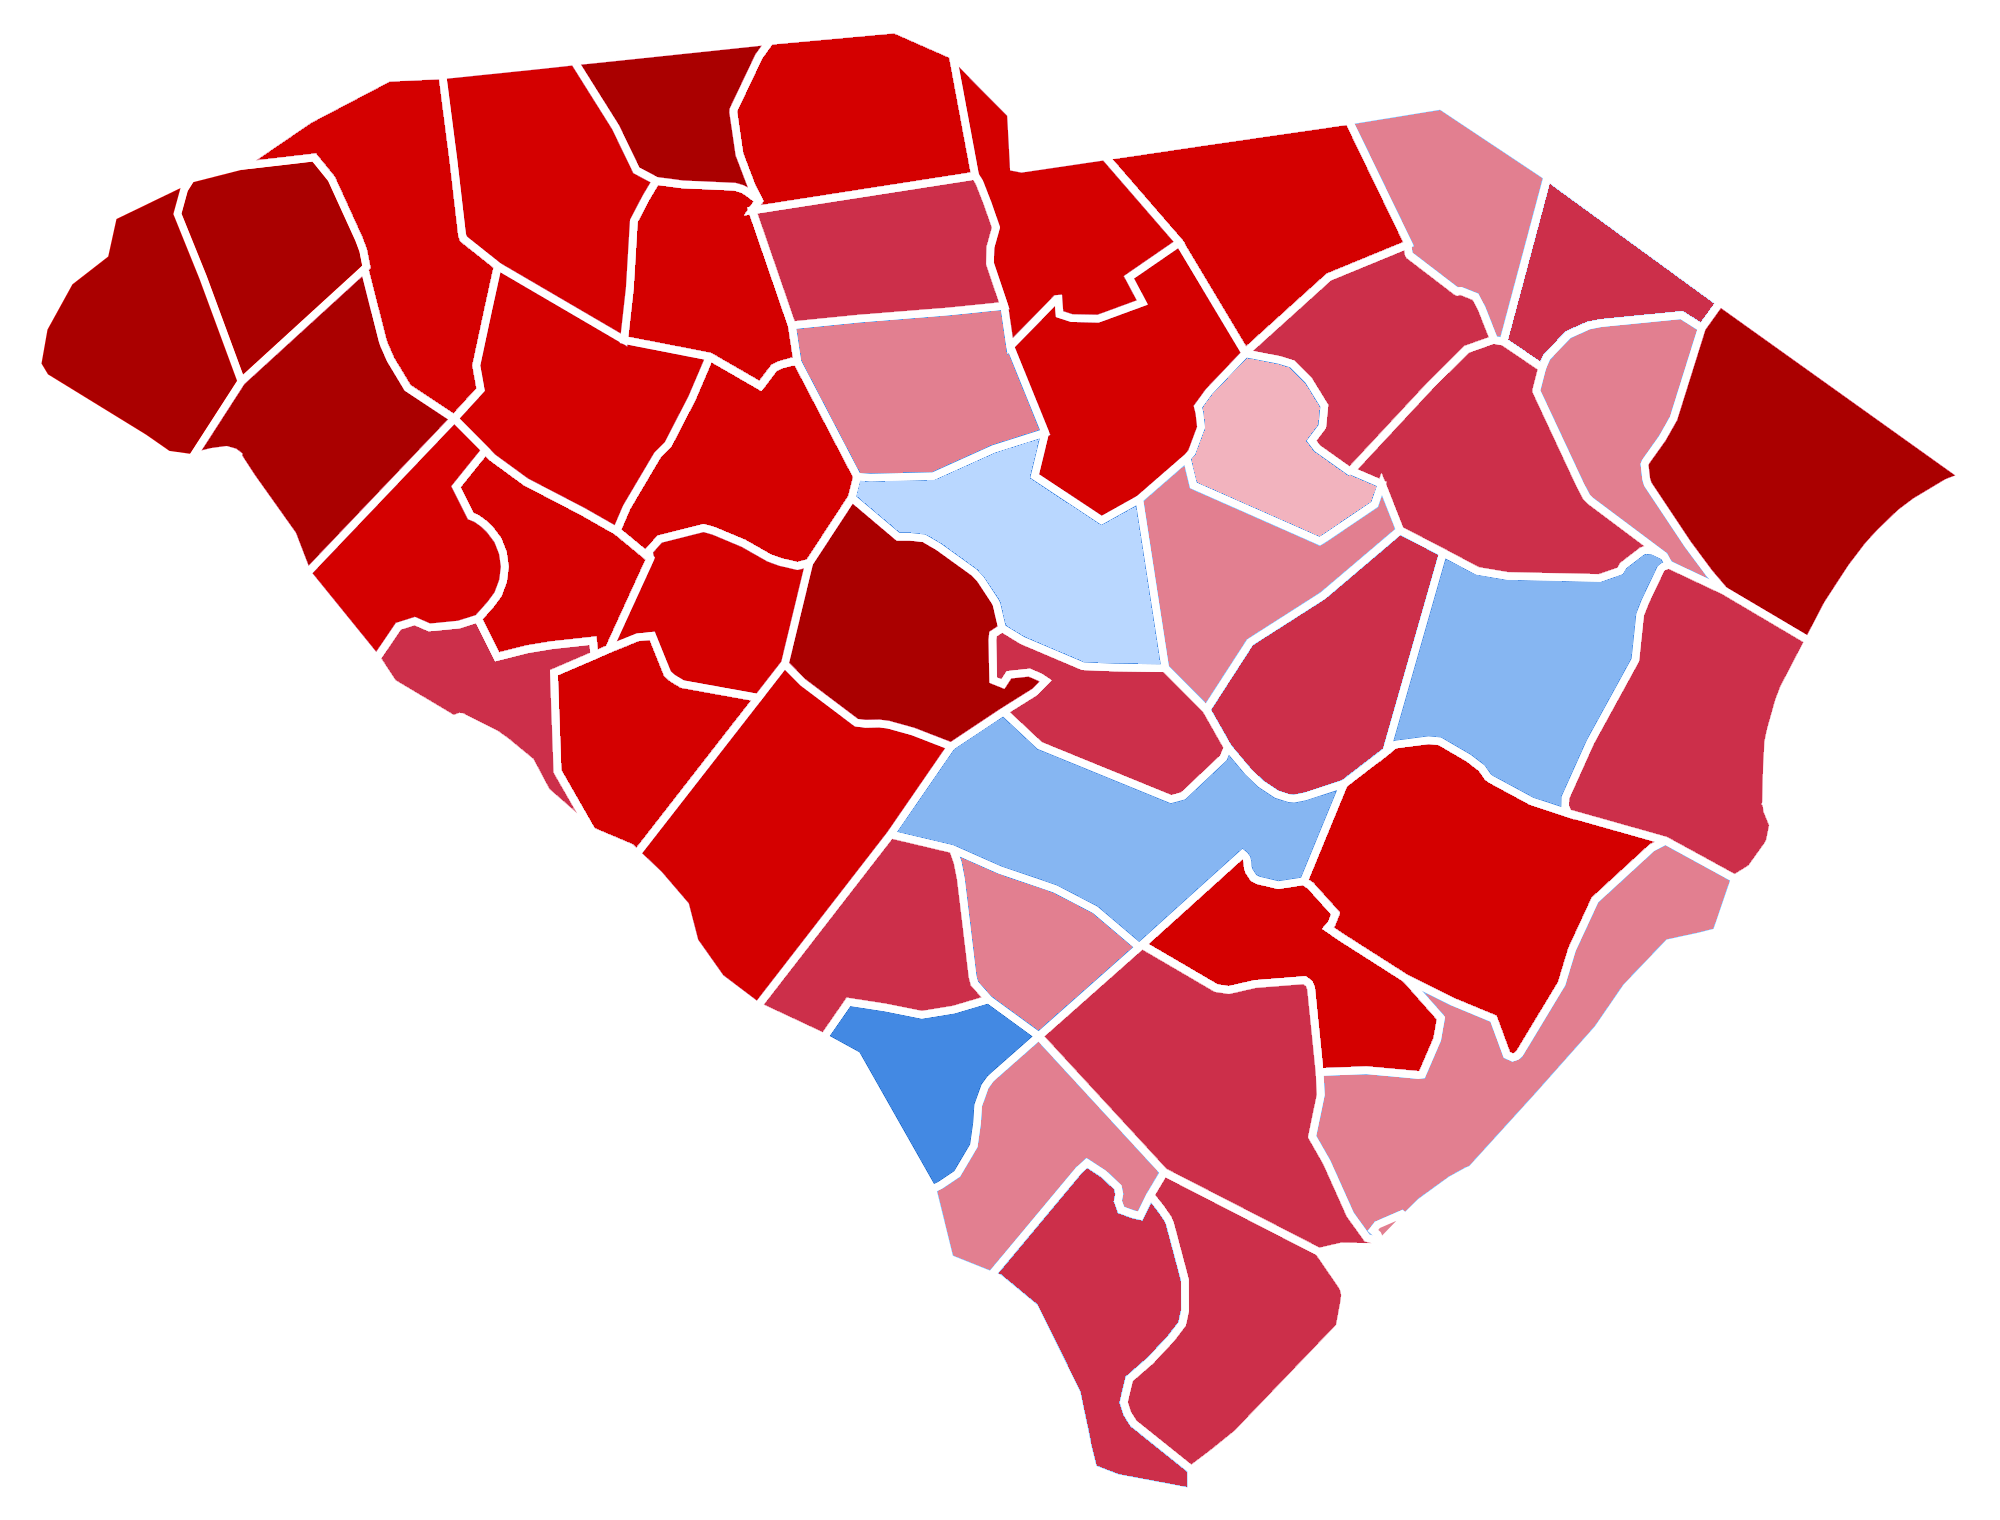 South_Carolina_Presidential_Election_Results_2016_Republican_Landslide_15.06%.png